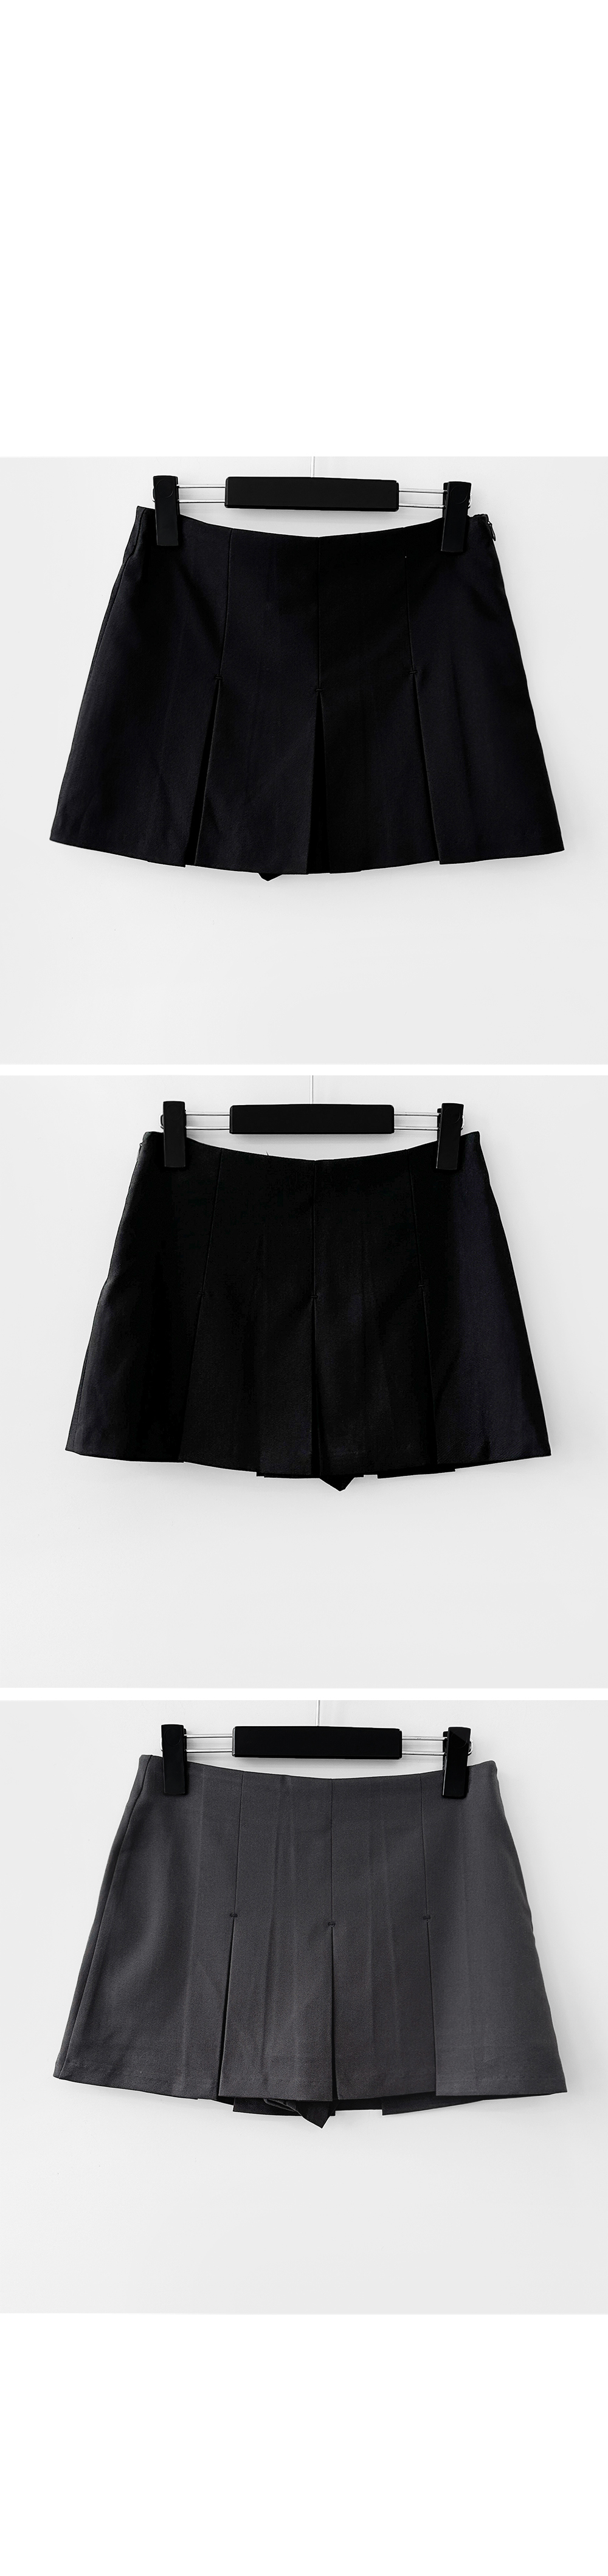 mini skirt charcoal color image-S1L16